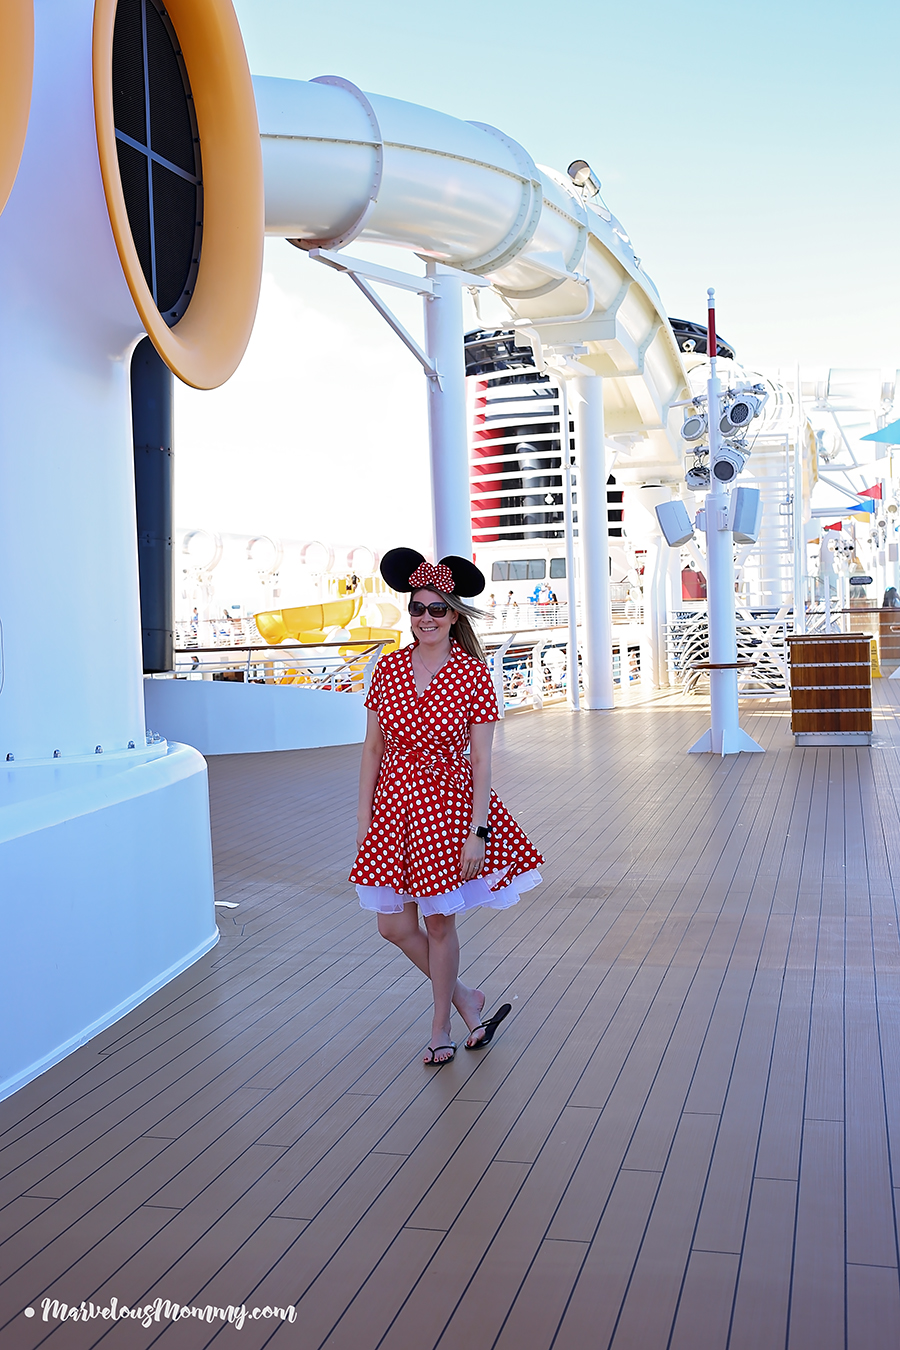 Disney Dream Cruise Ship Deck